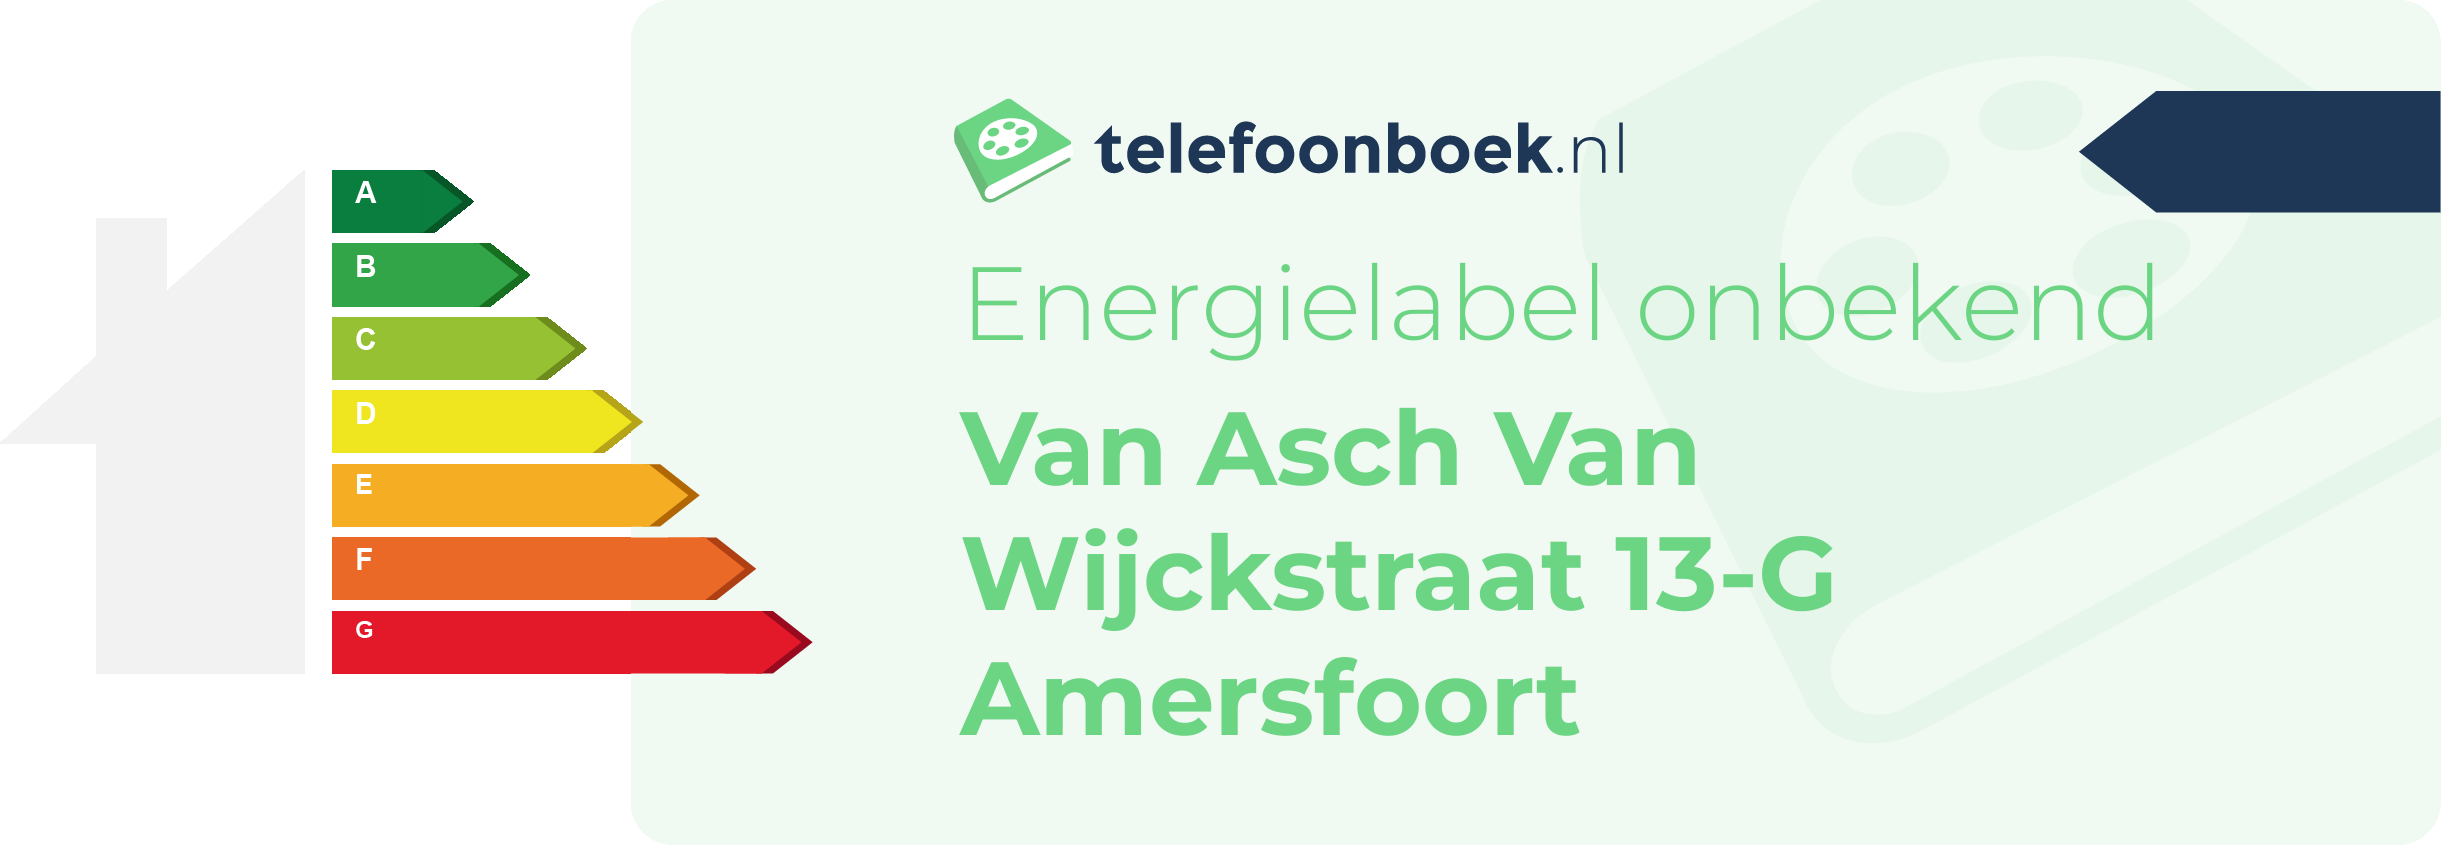 Energielabel Van Asch Van Wijckstraat 13-G Amersfoort